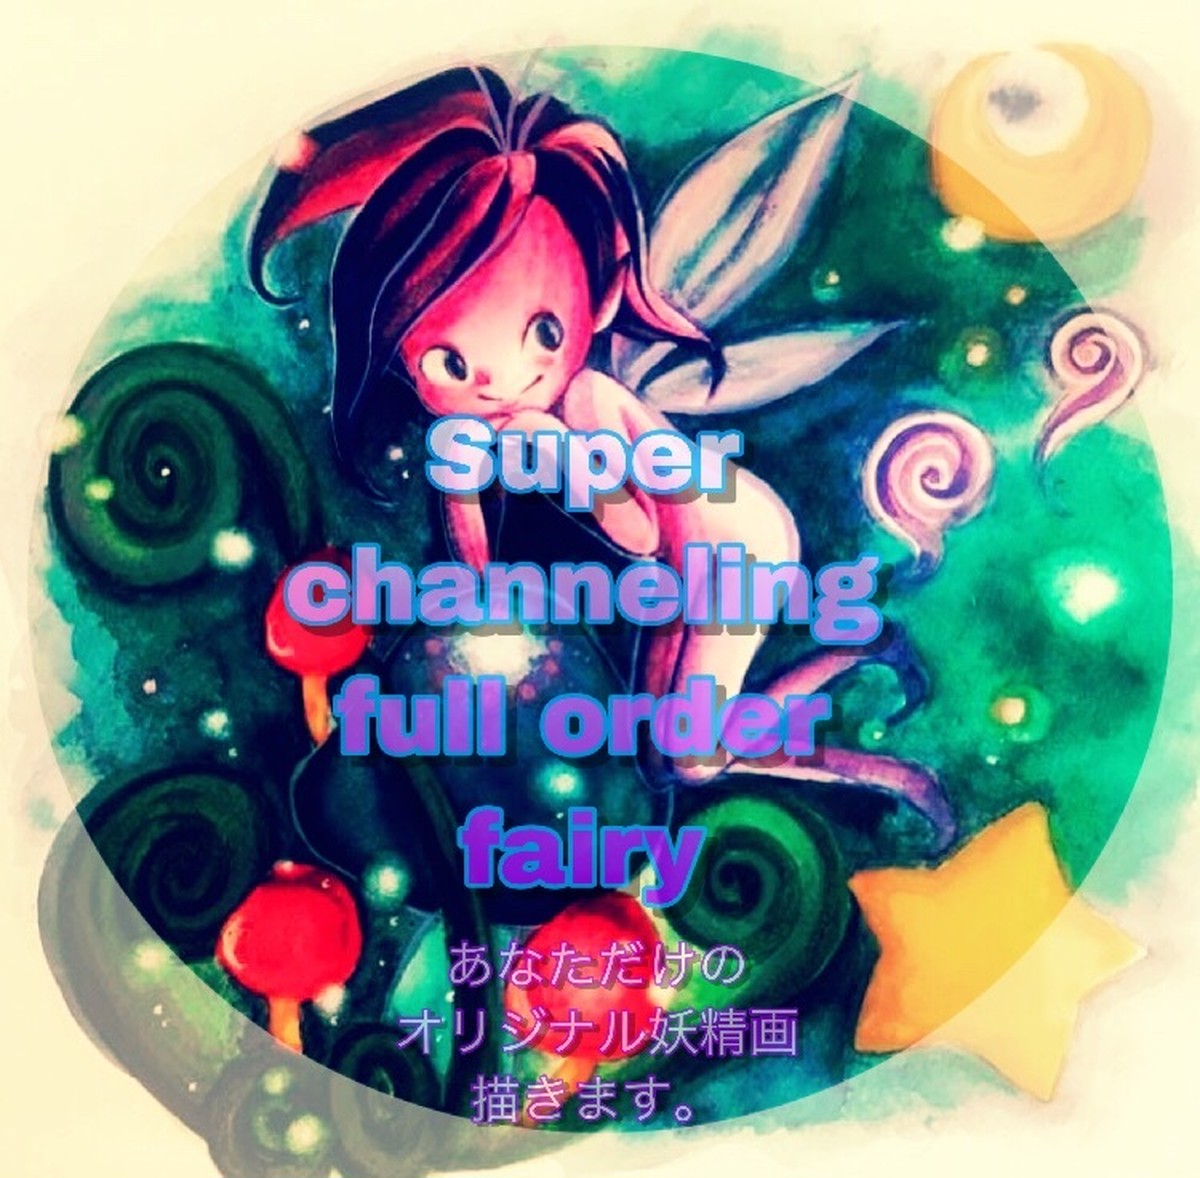 Super Channeling Full Order Fairy あなただけの妖精画を描きます Hannah S Forest